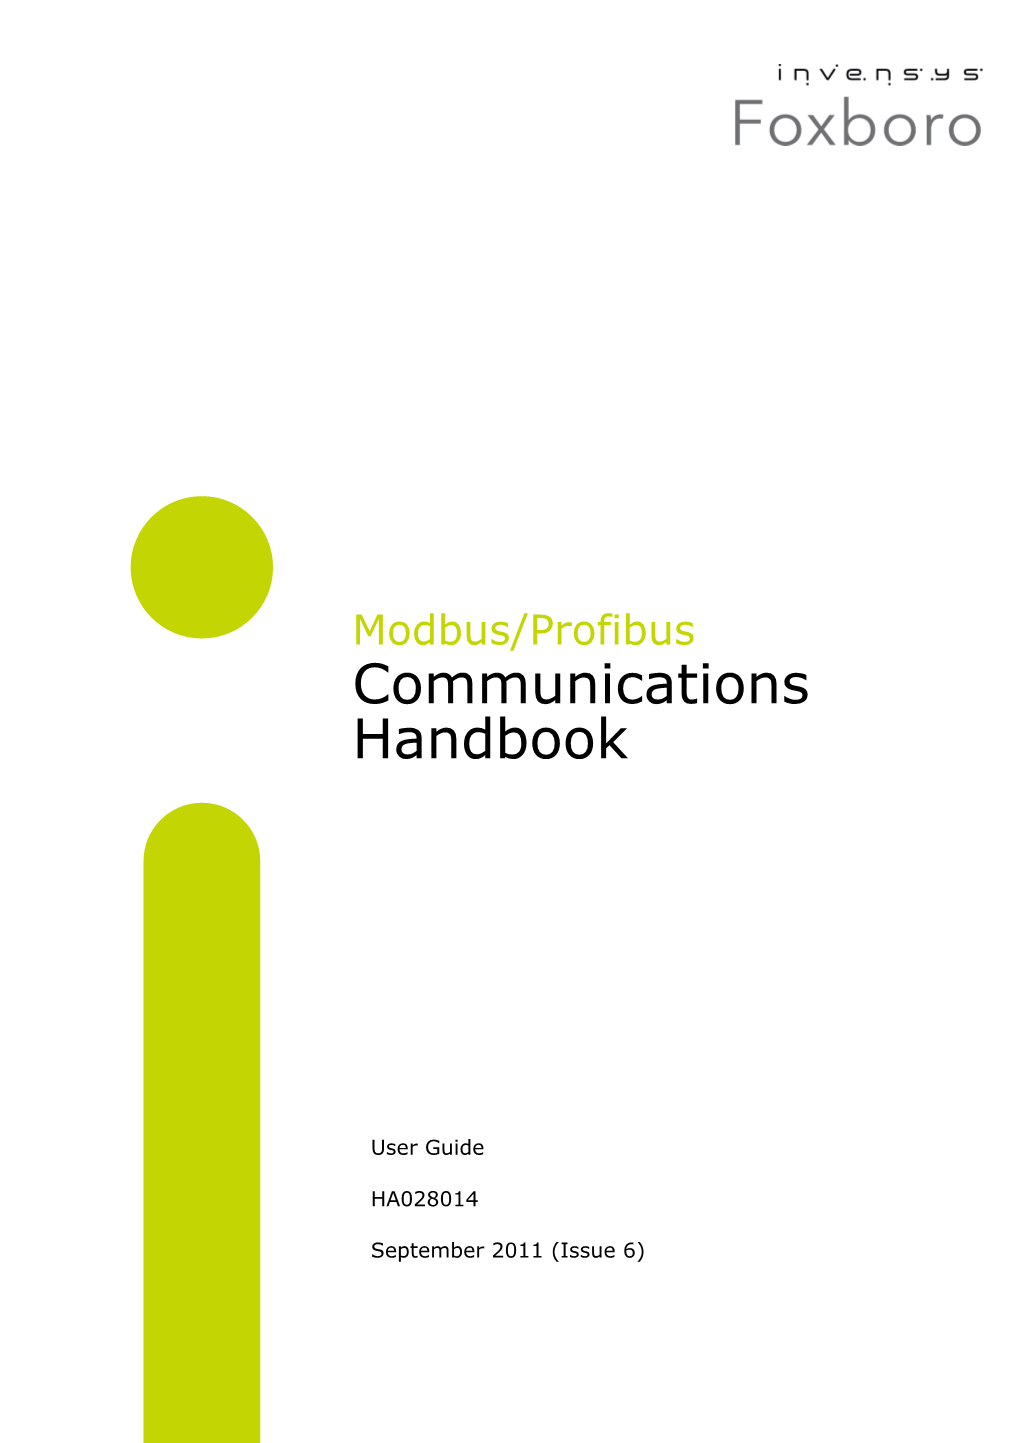 Modbus/Profibus Communications Handbook